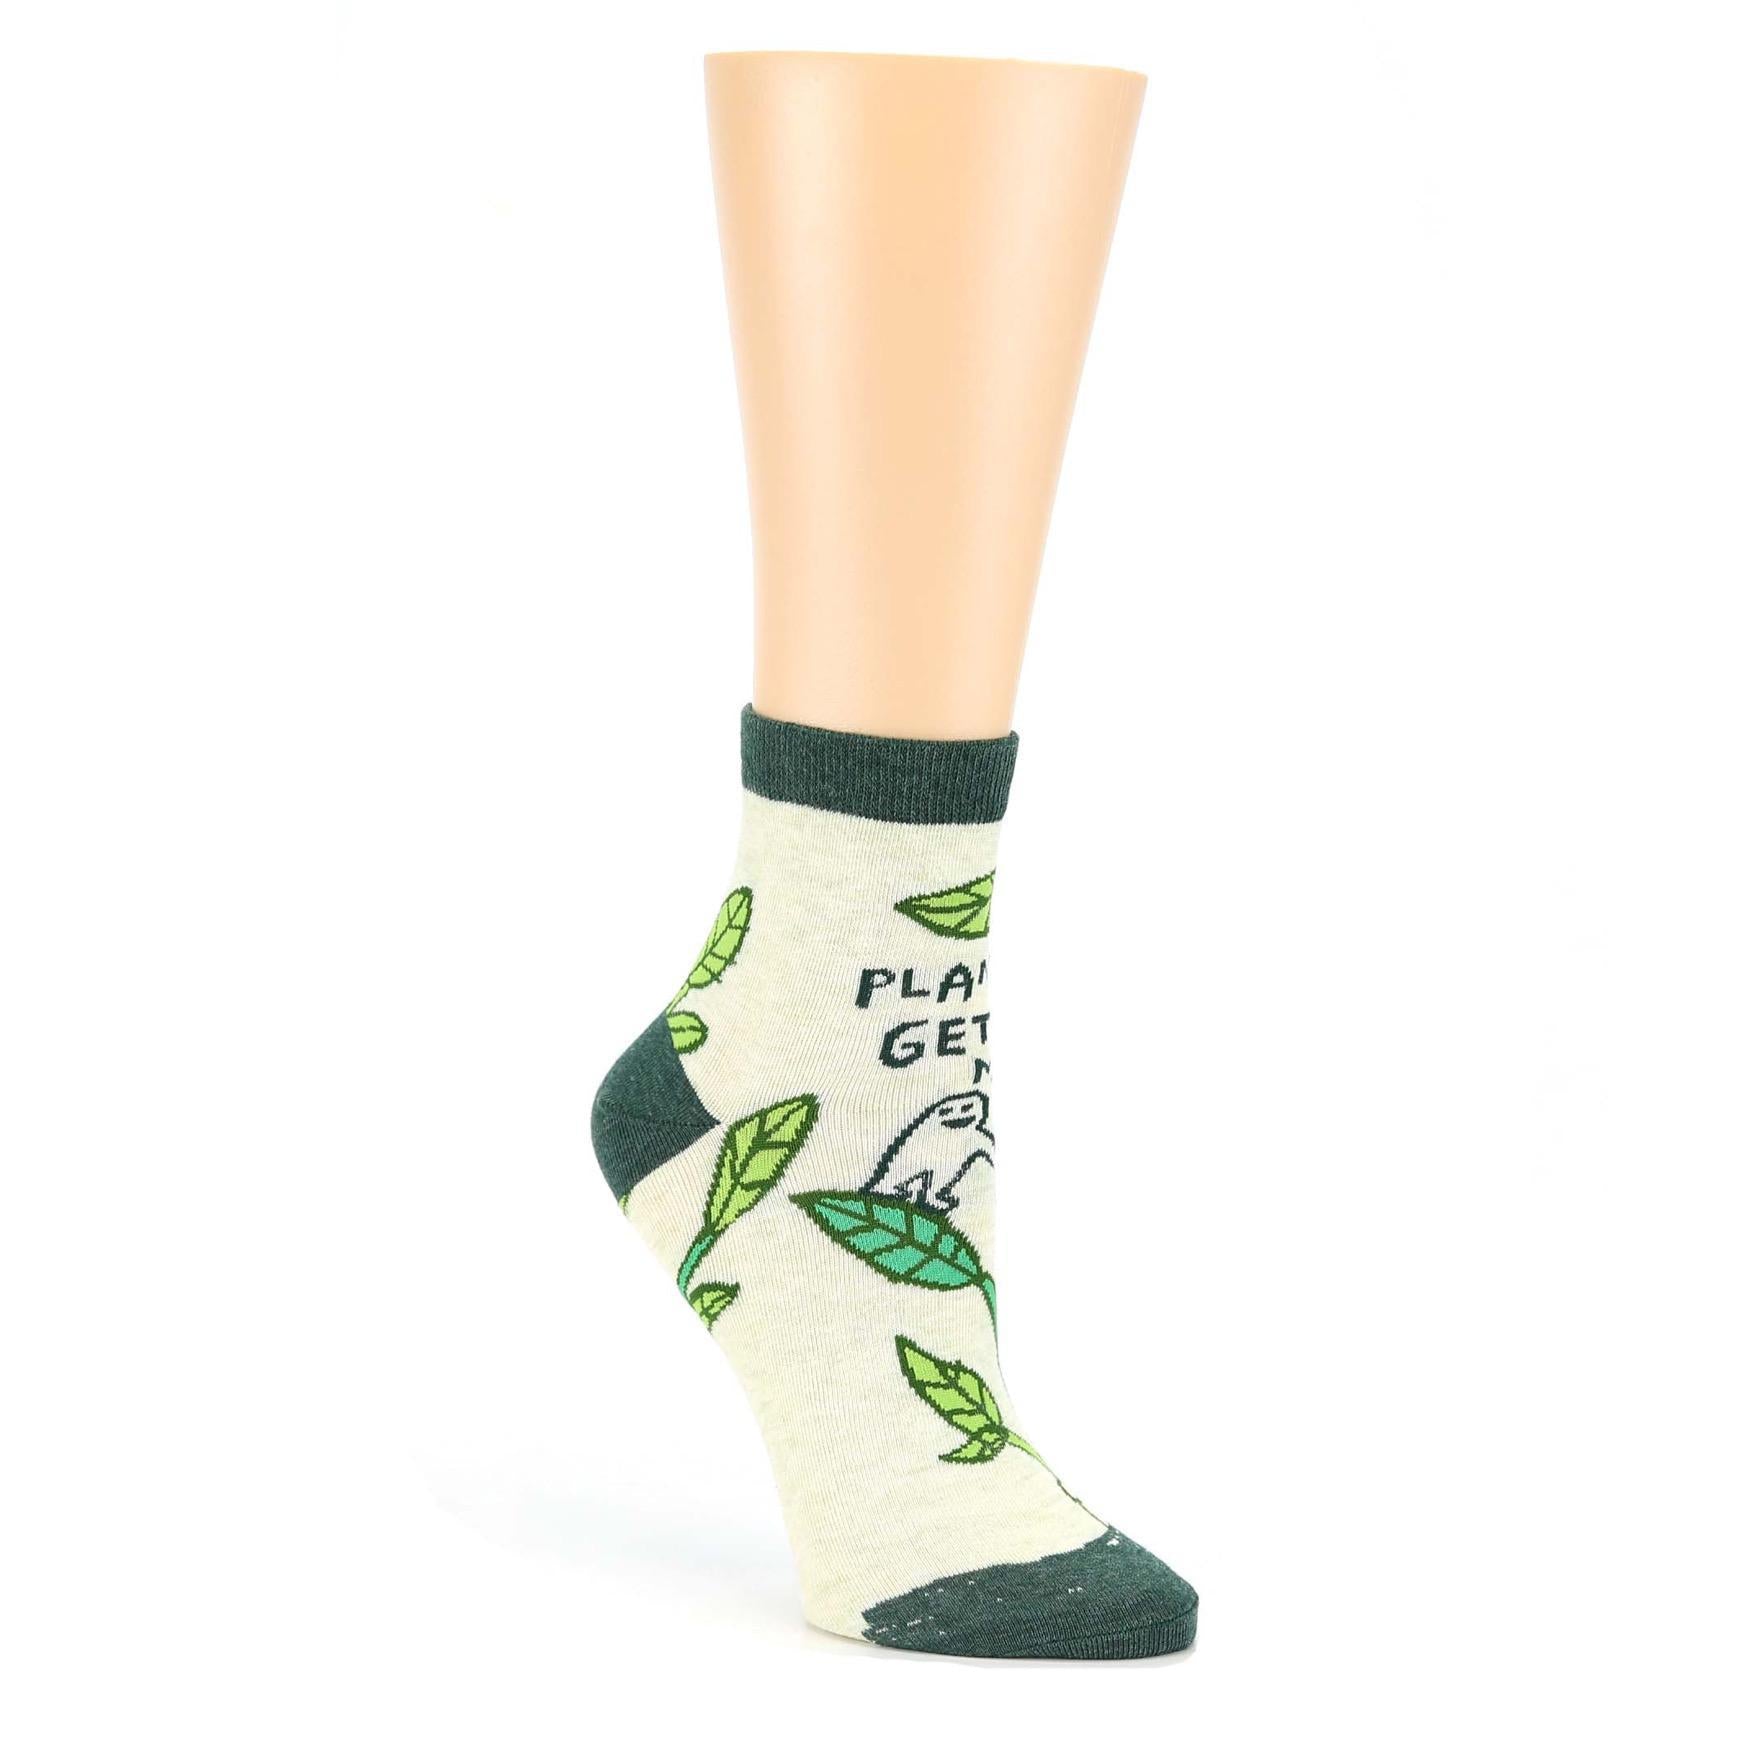 "Plants Get Me" - SW627 Ankle Socks - Port Gamble General Store & Cafe